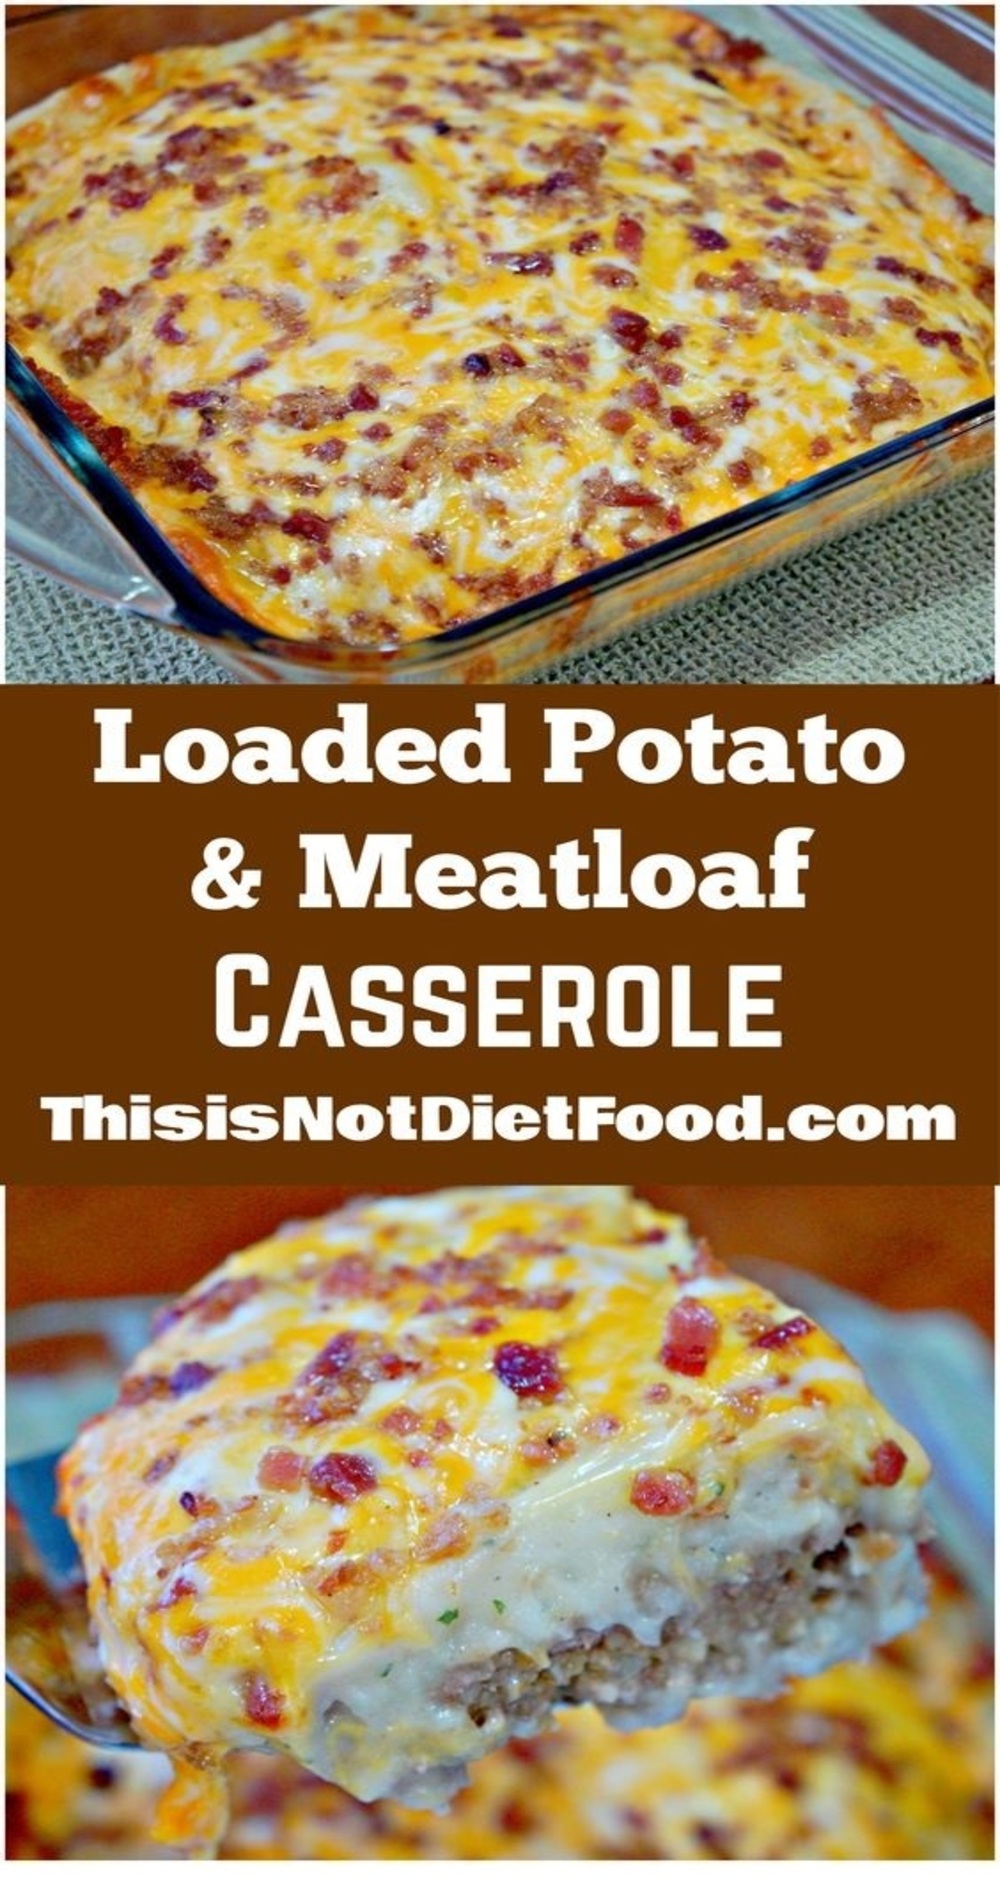 Loaded Potato and Meatloaf Casserole